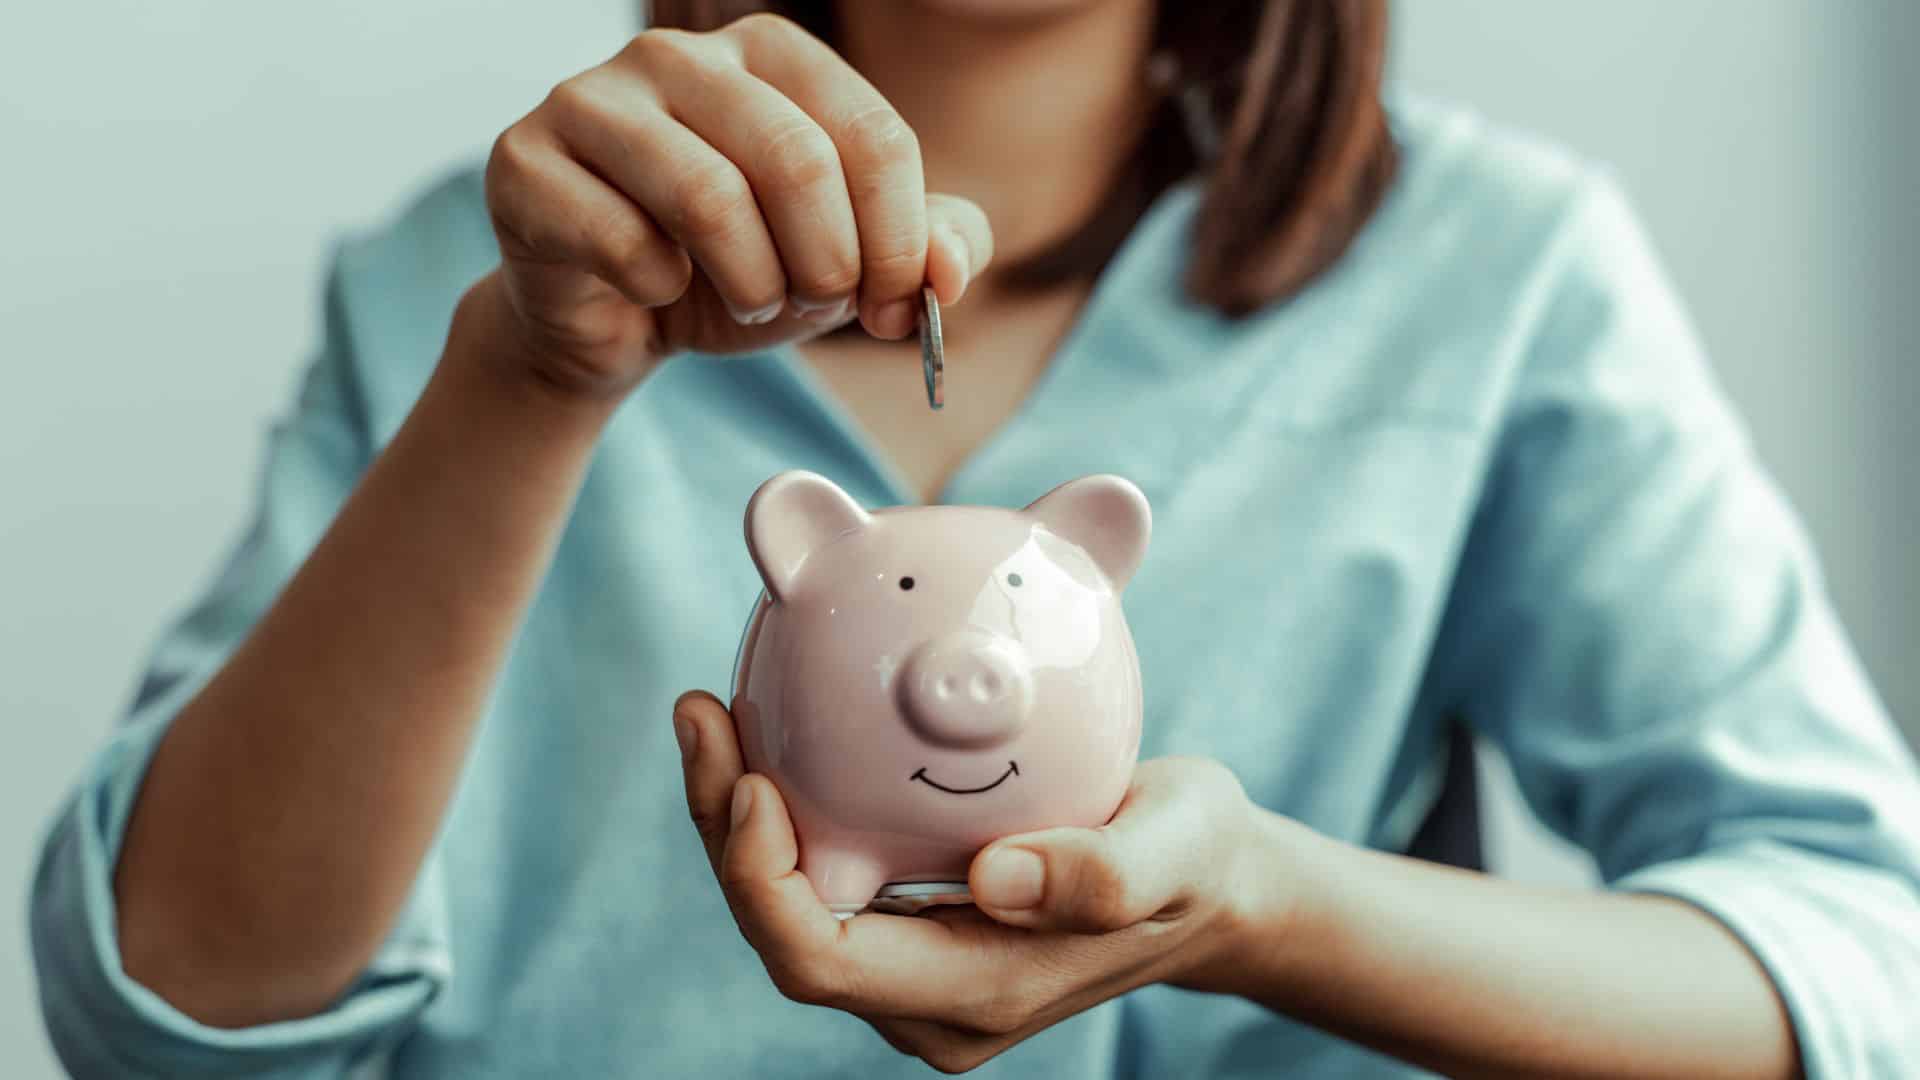 Woman saving in a piggy bank